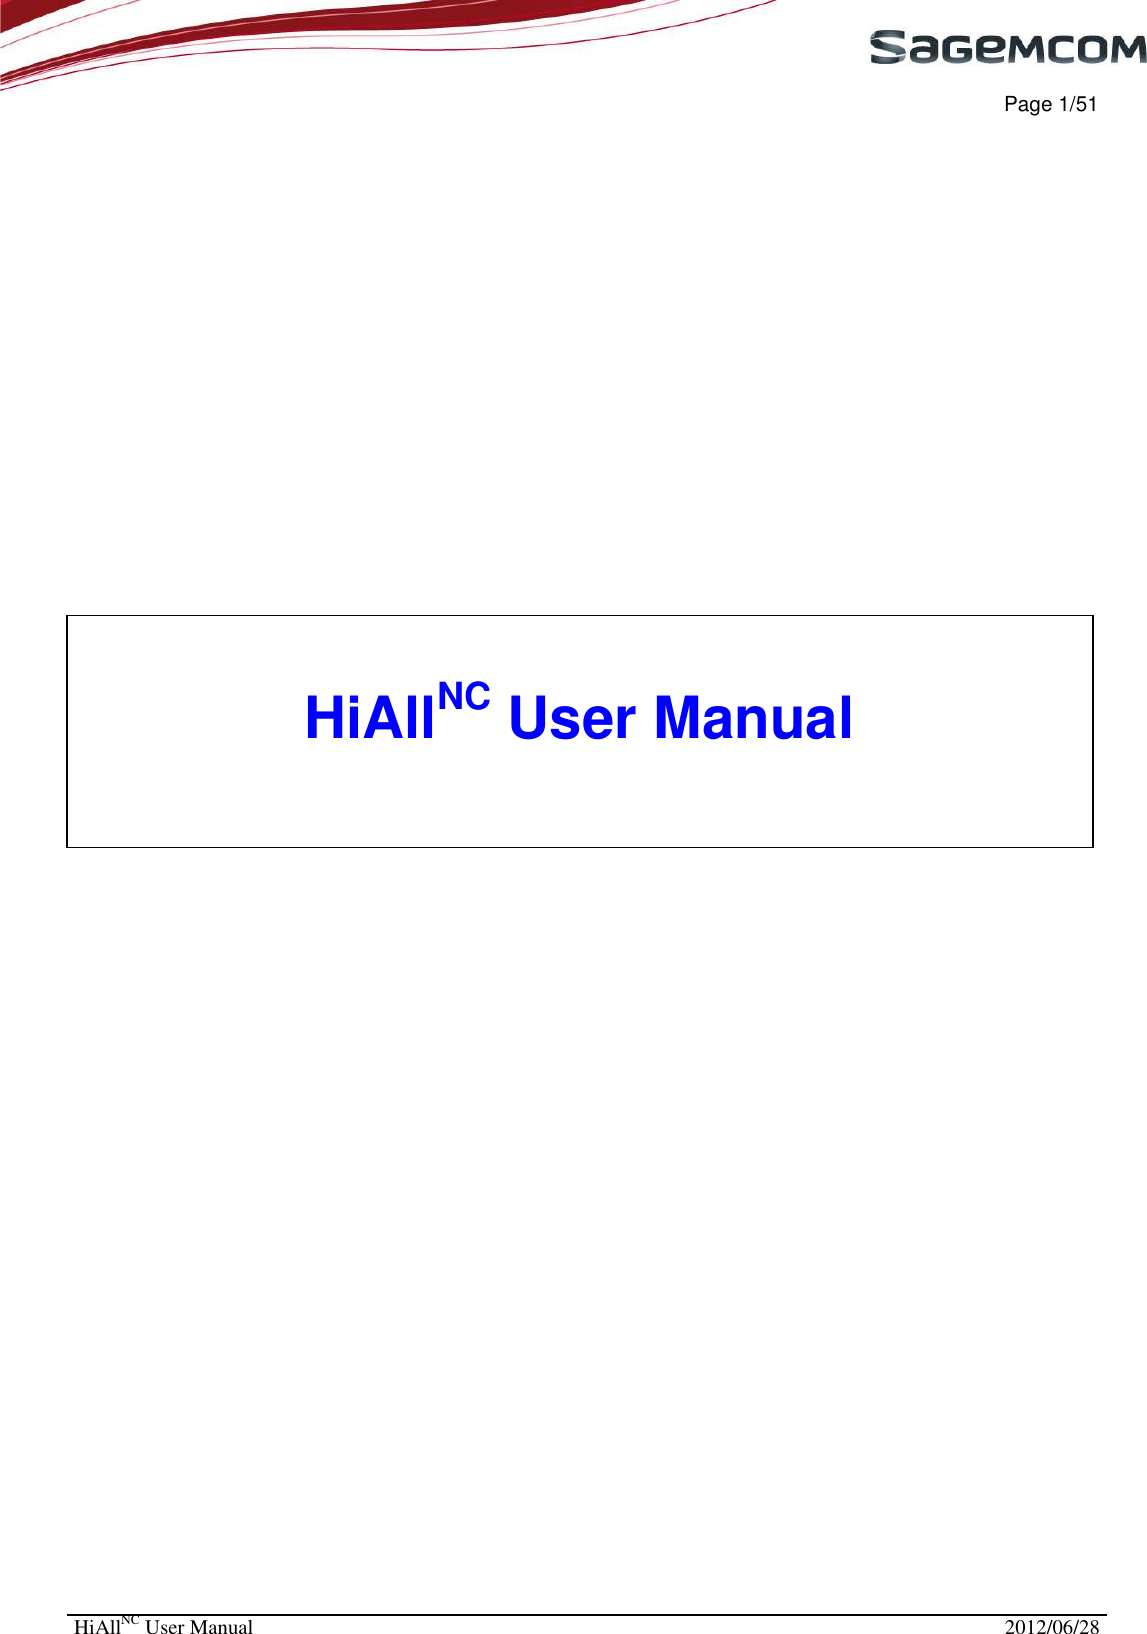     Page 1/51 HiAllNC User Manual  2012/06/28                                 HiAllNC User Manual   